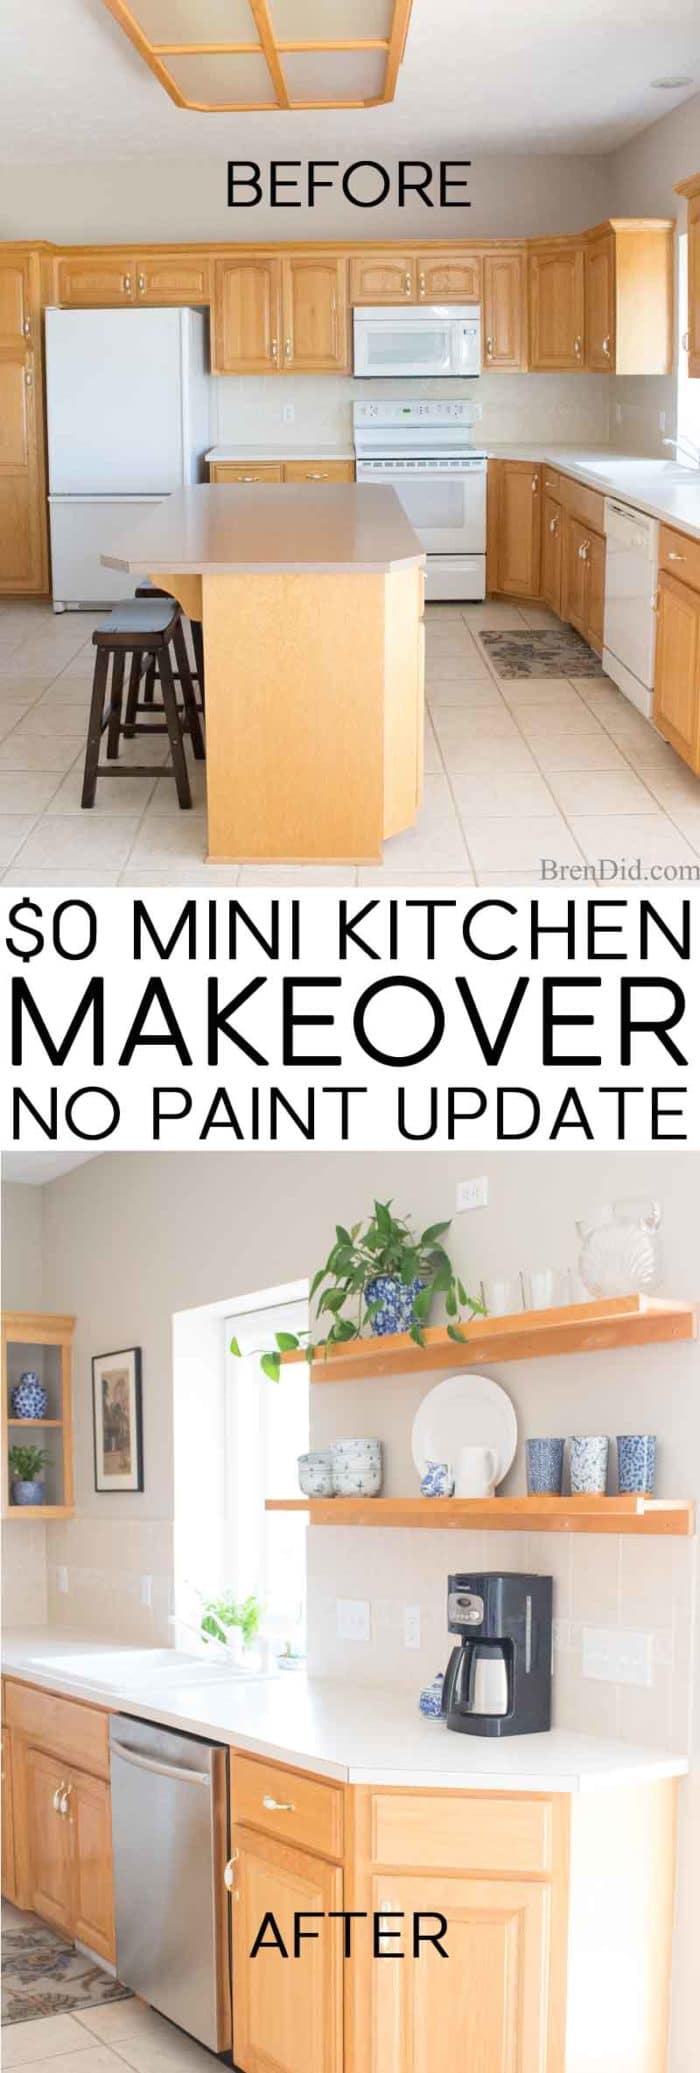 The Amazing $10 Mini Kitchen Makeover - Bren Did